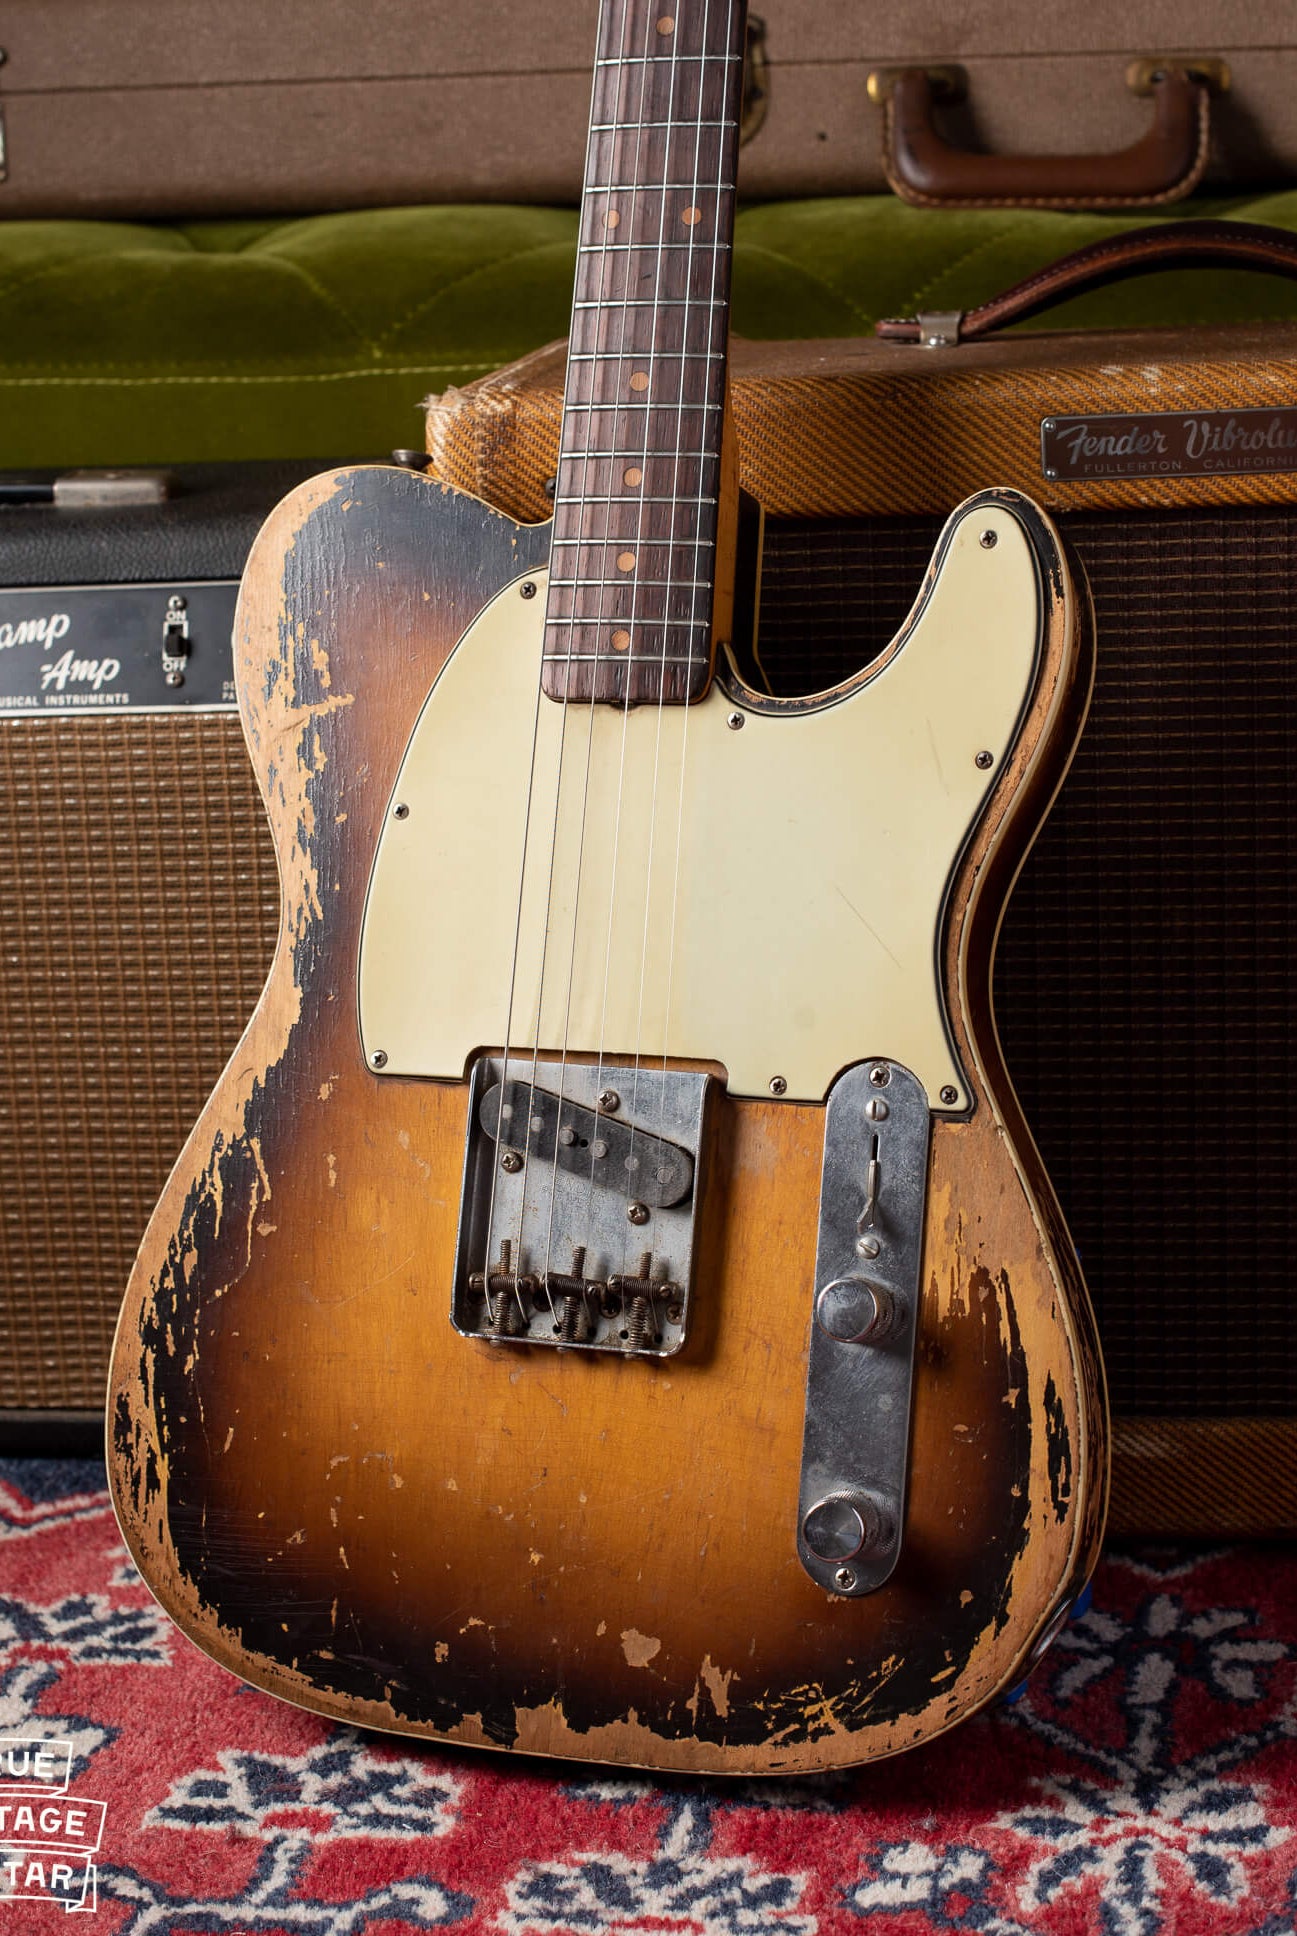 1960 Fender Esquire Custom guitar with Sunburst finish, double edge binding, and one pickup. 